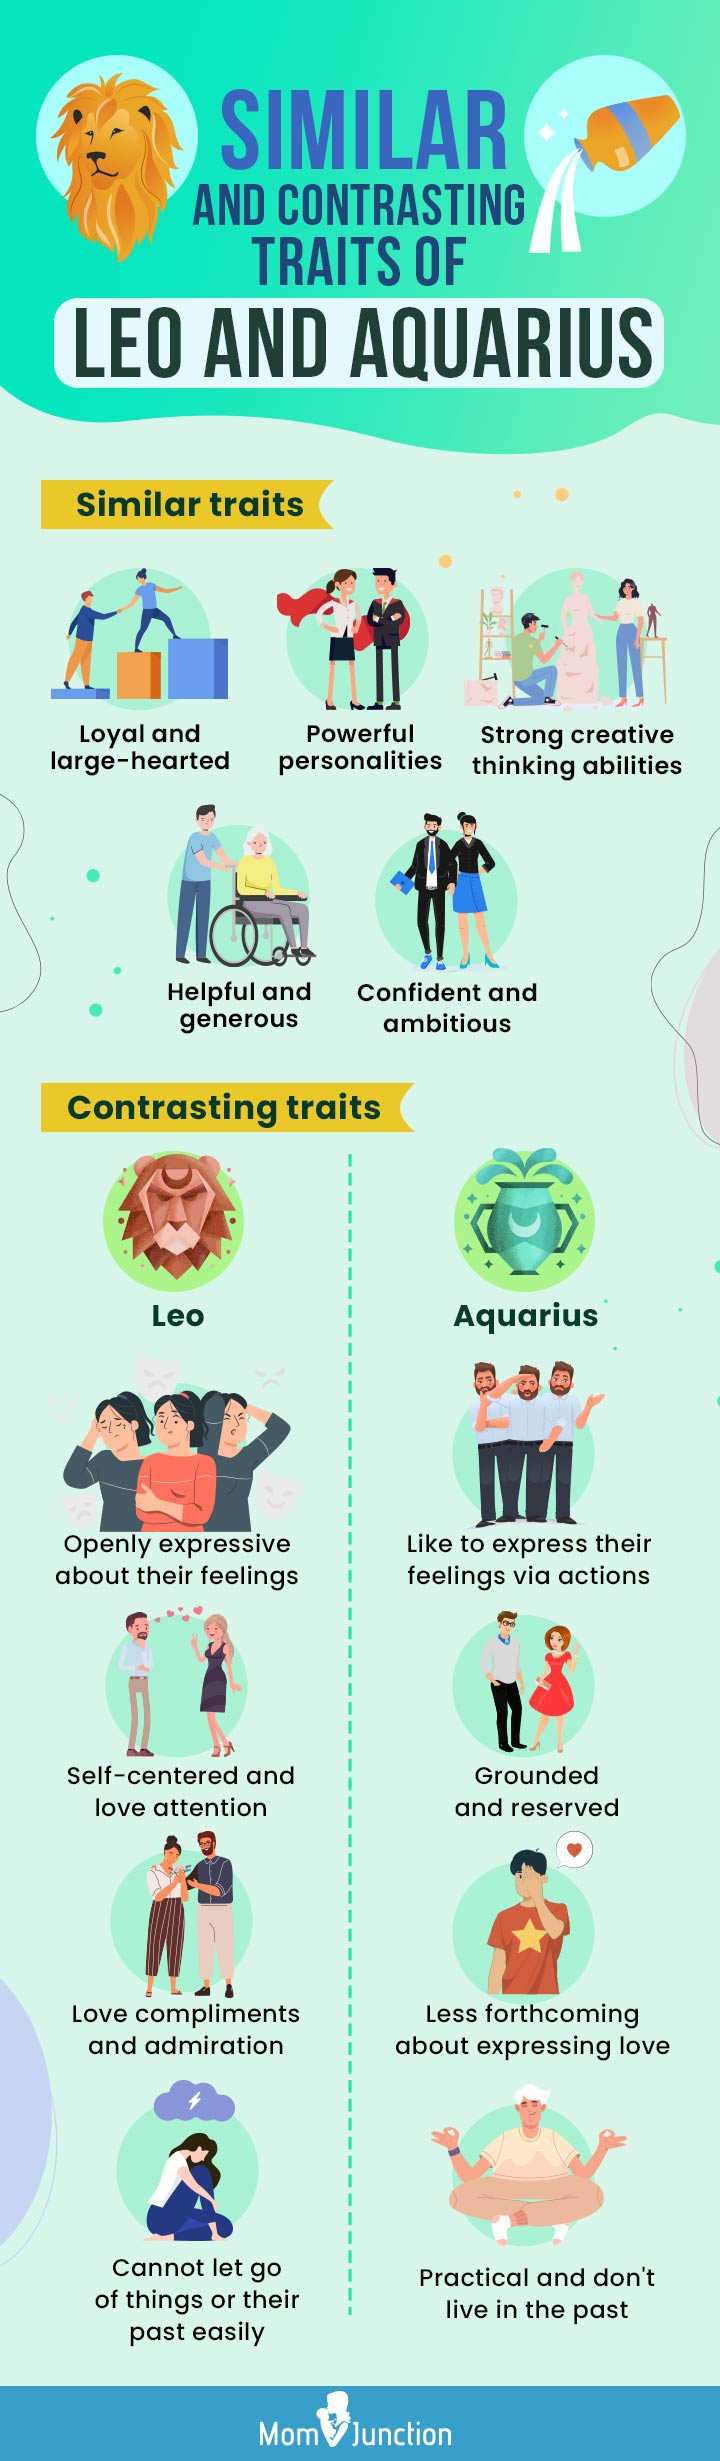 traits of leo and aquarius [infographic]